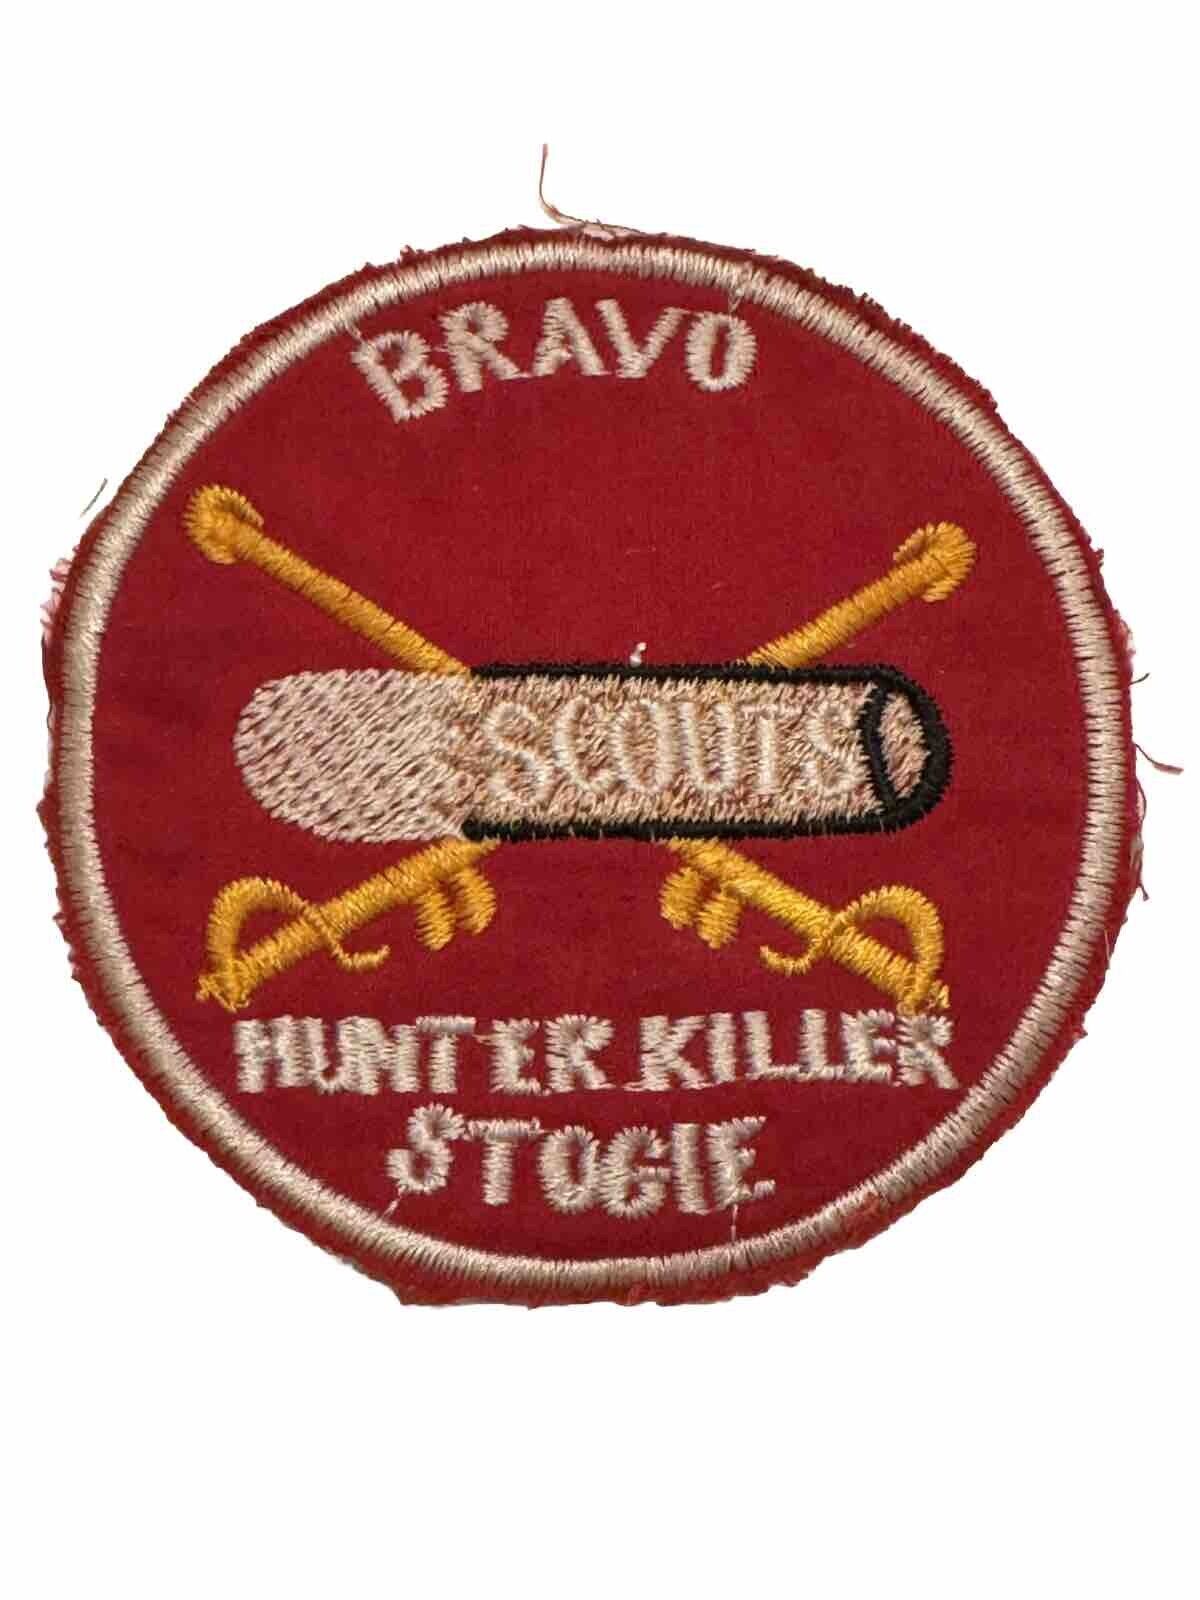 Vietnam War Patch Hunter Killer Stogies Bravo Scouts US Air Cavalry Military Vtg